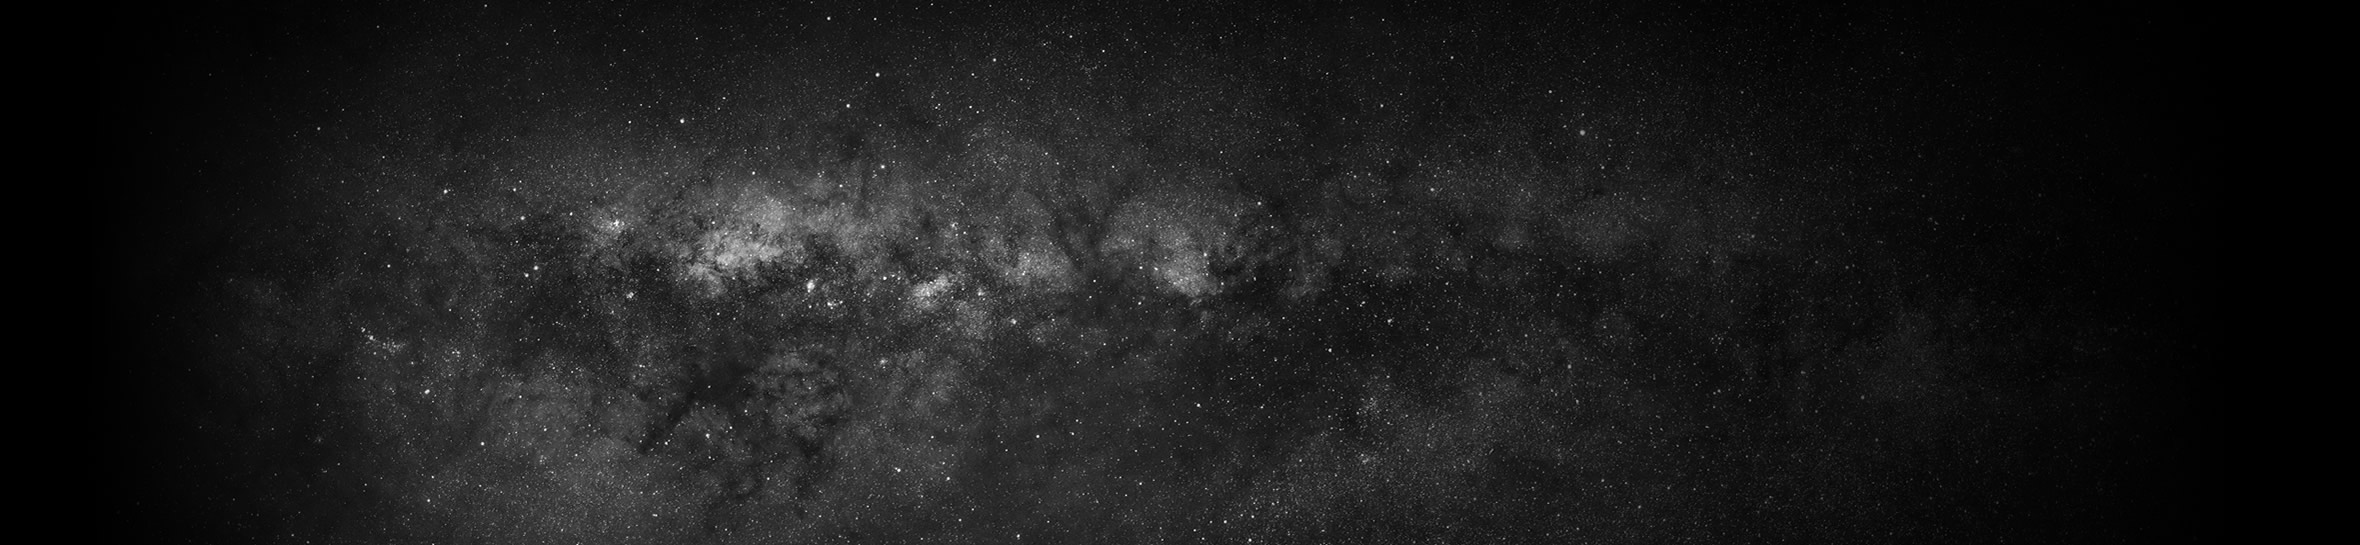 Display Background - Milky Way